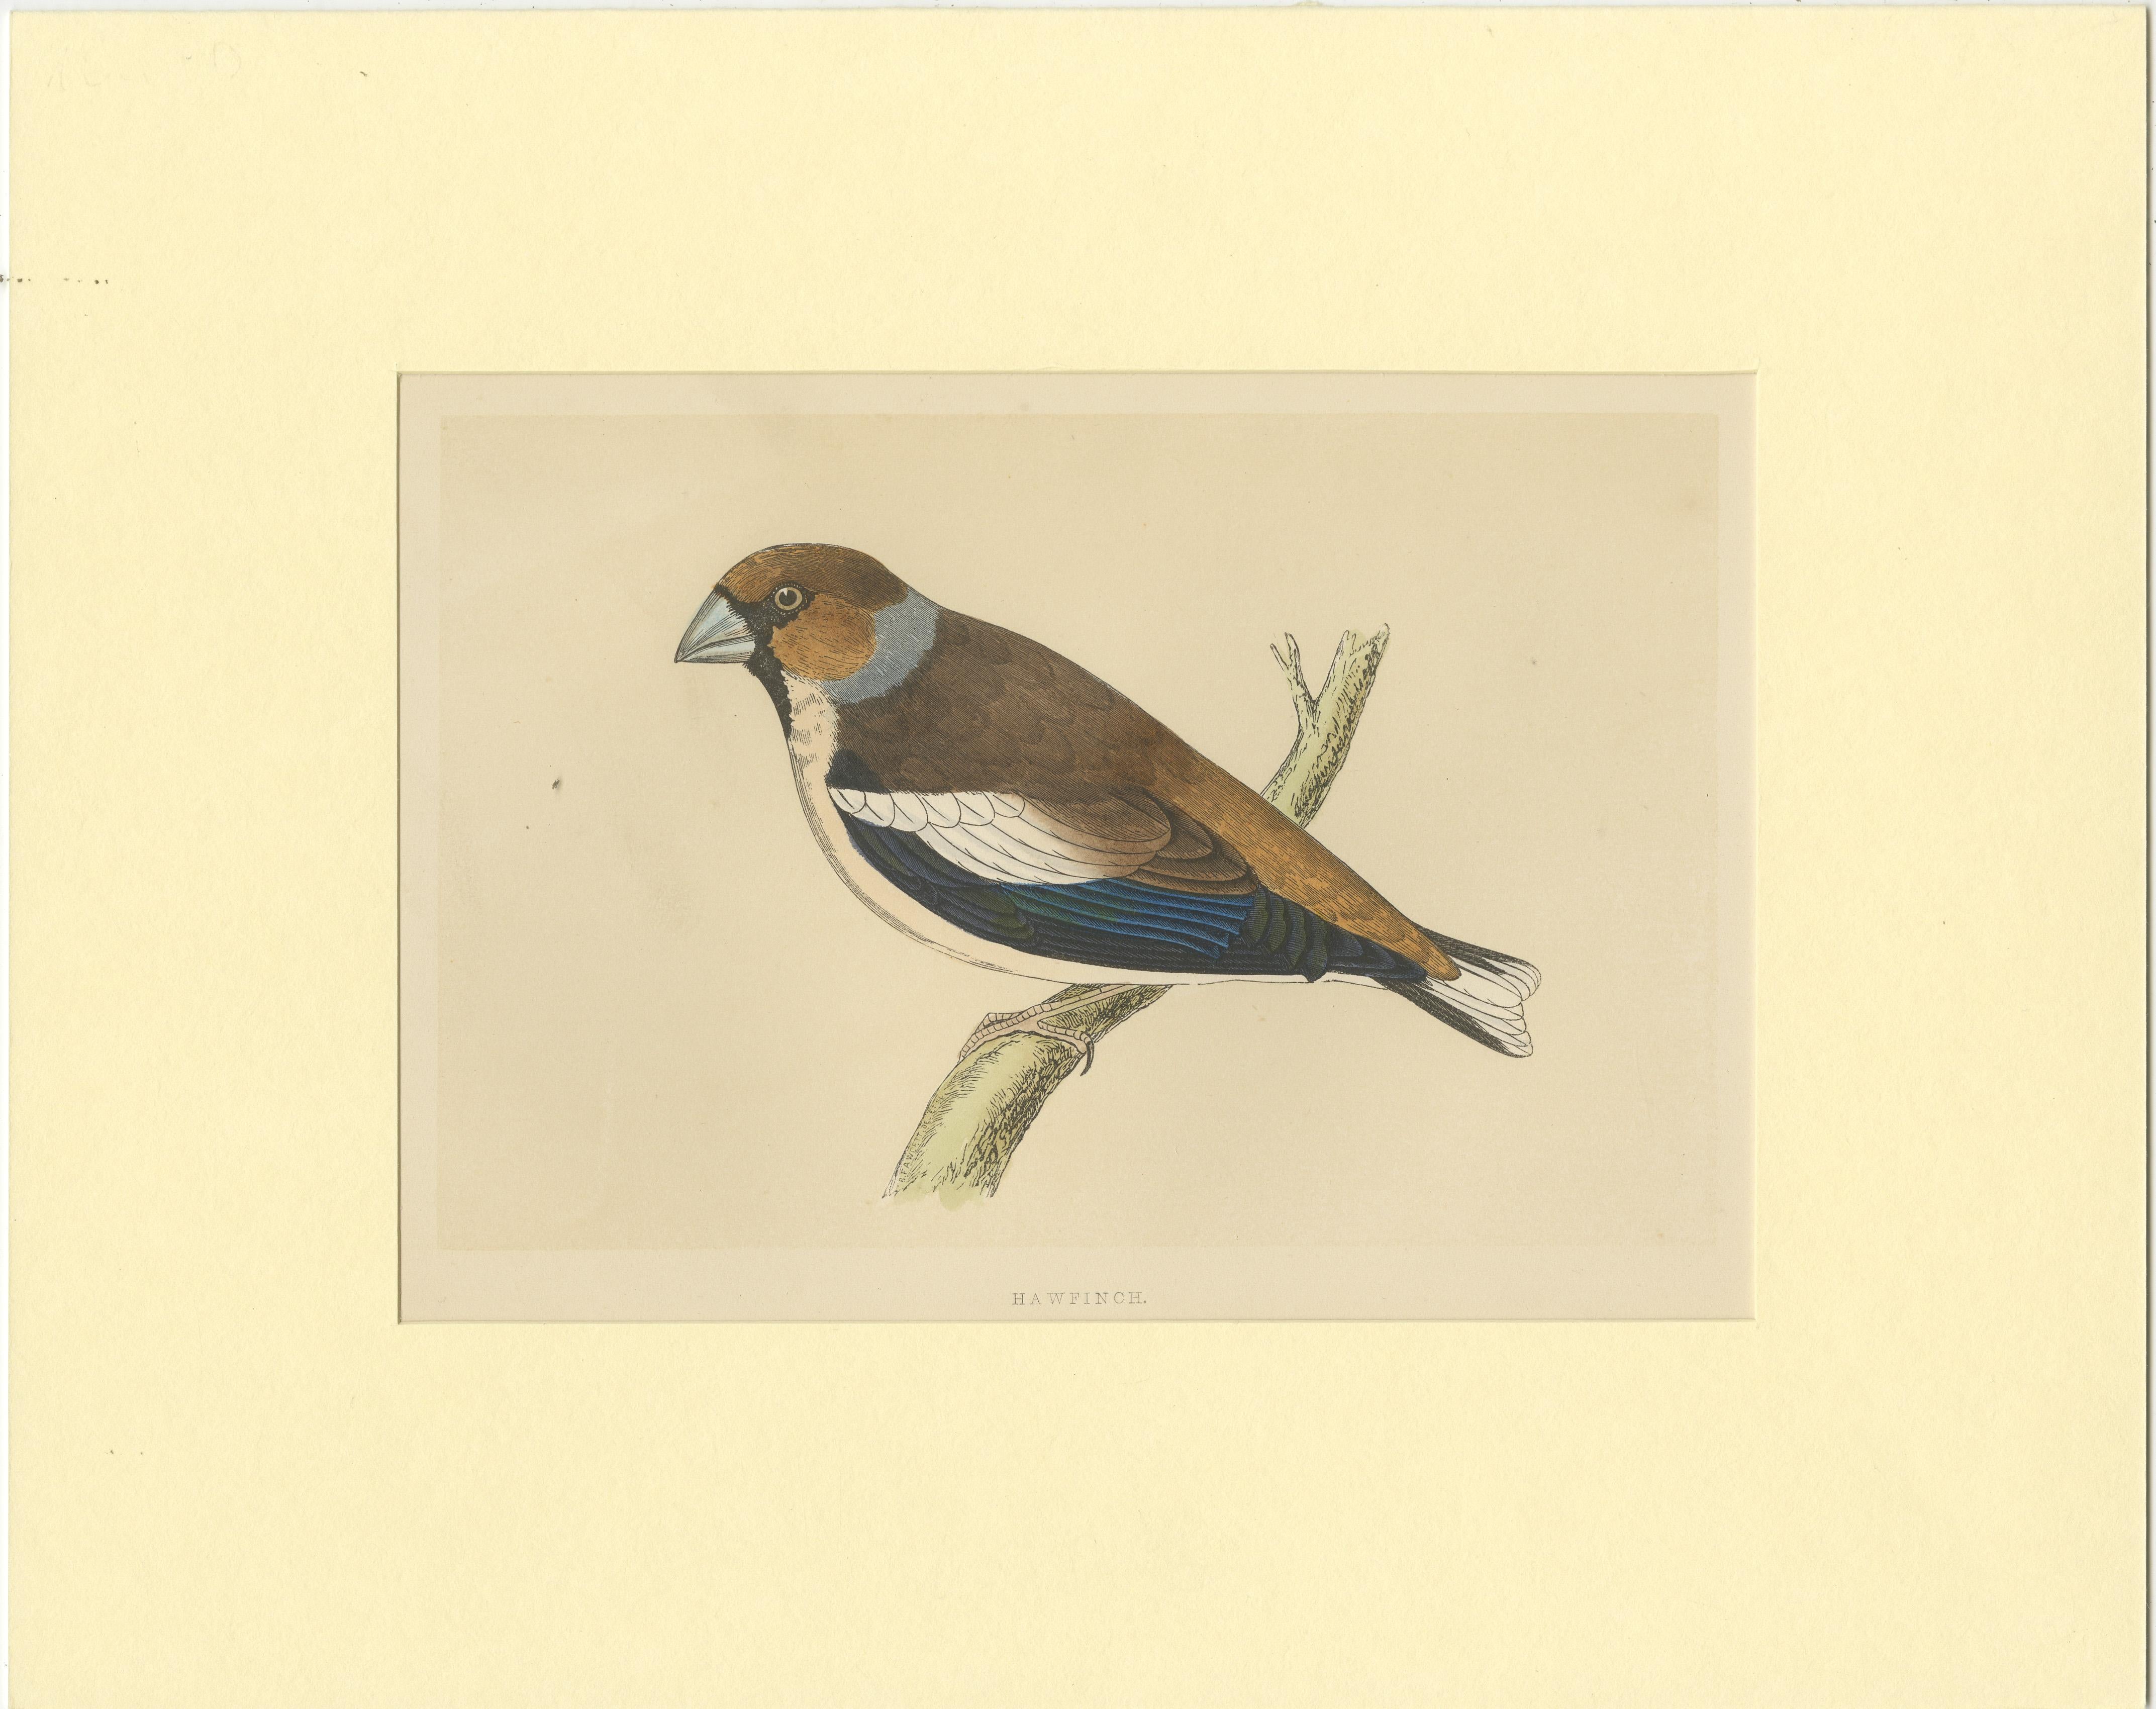 Original antique bird print of a hawfinch. This print originates from 